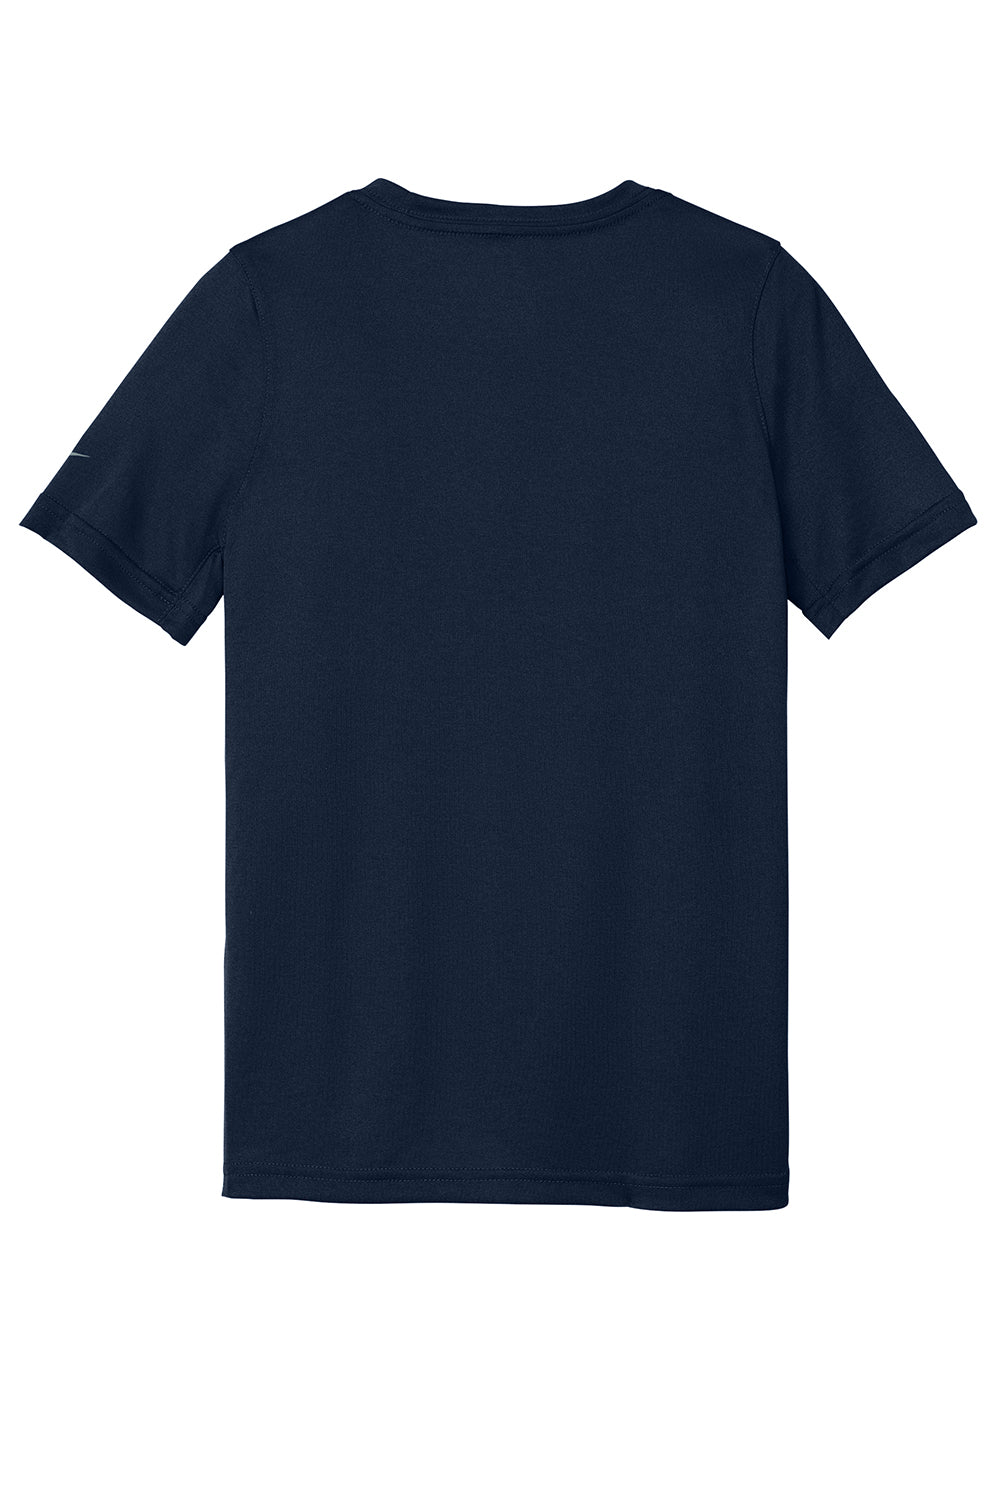 Nike NKDX8787 Youth rLegend Dri-Fit Moisture Wicking Short Sleeve Crewneck T-Shirt College Navy Blue Flat Back